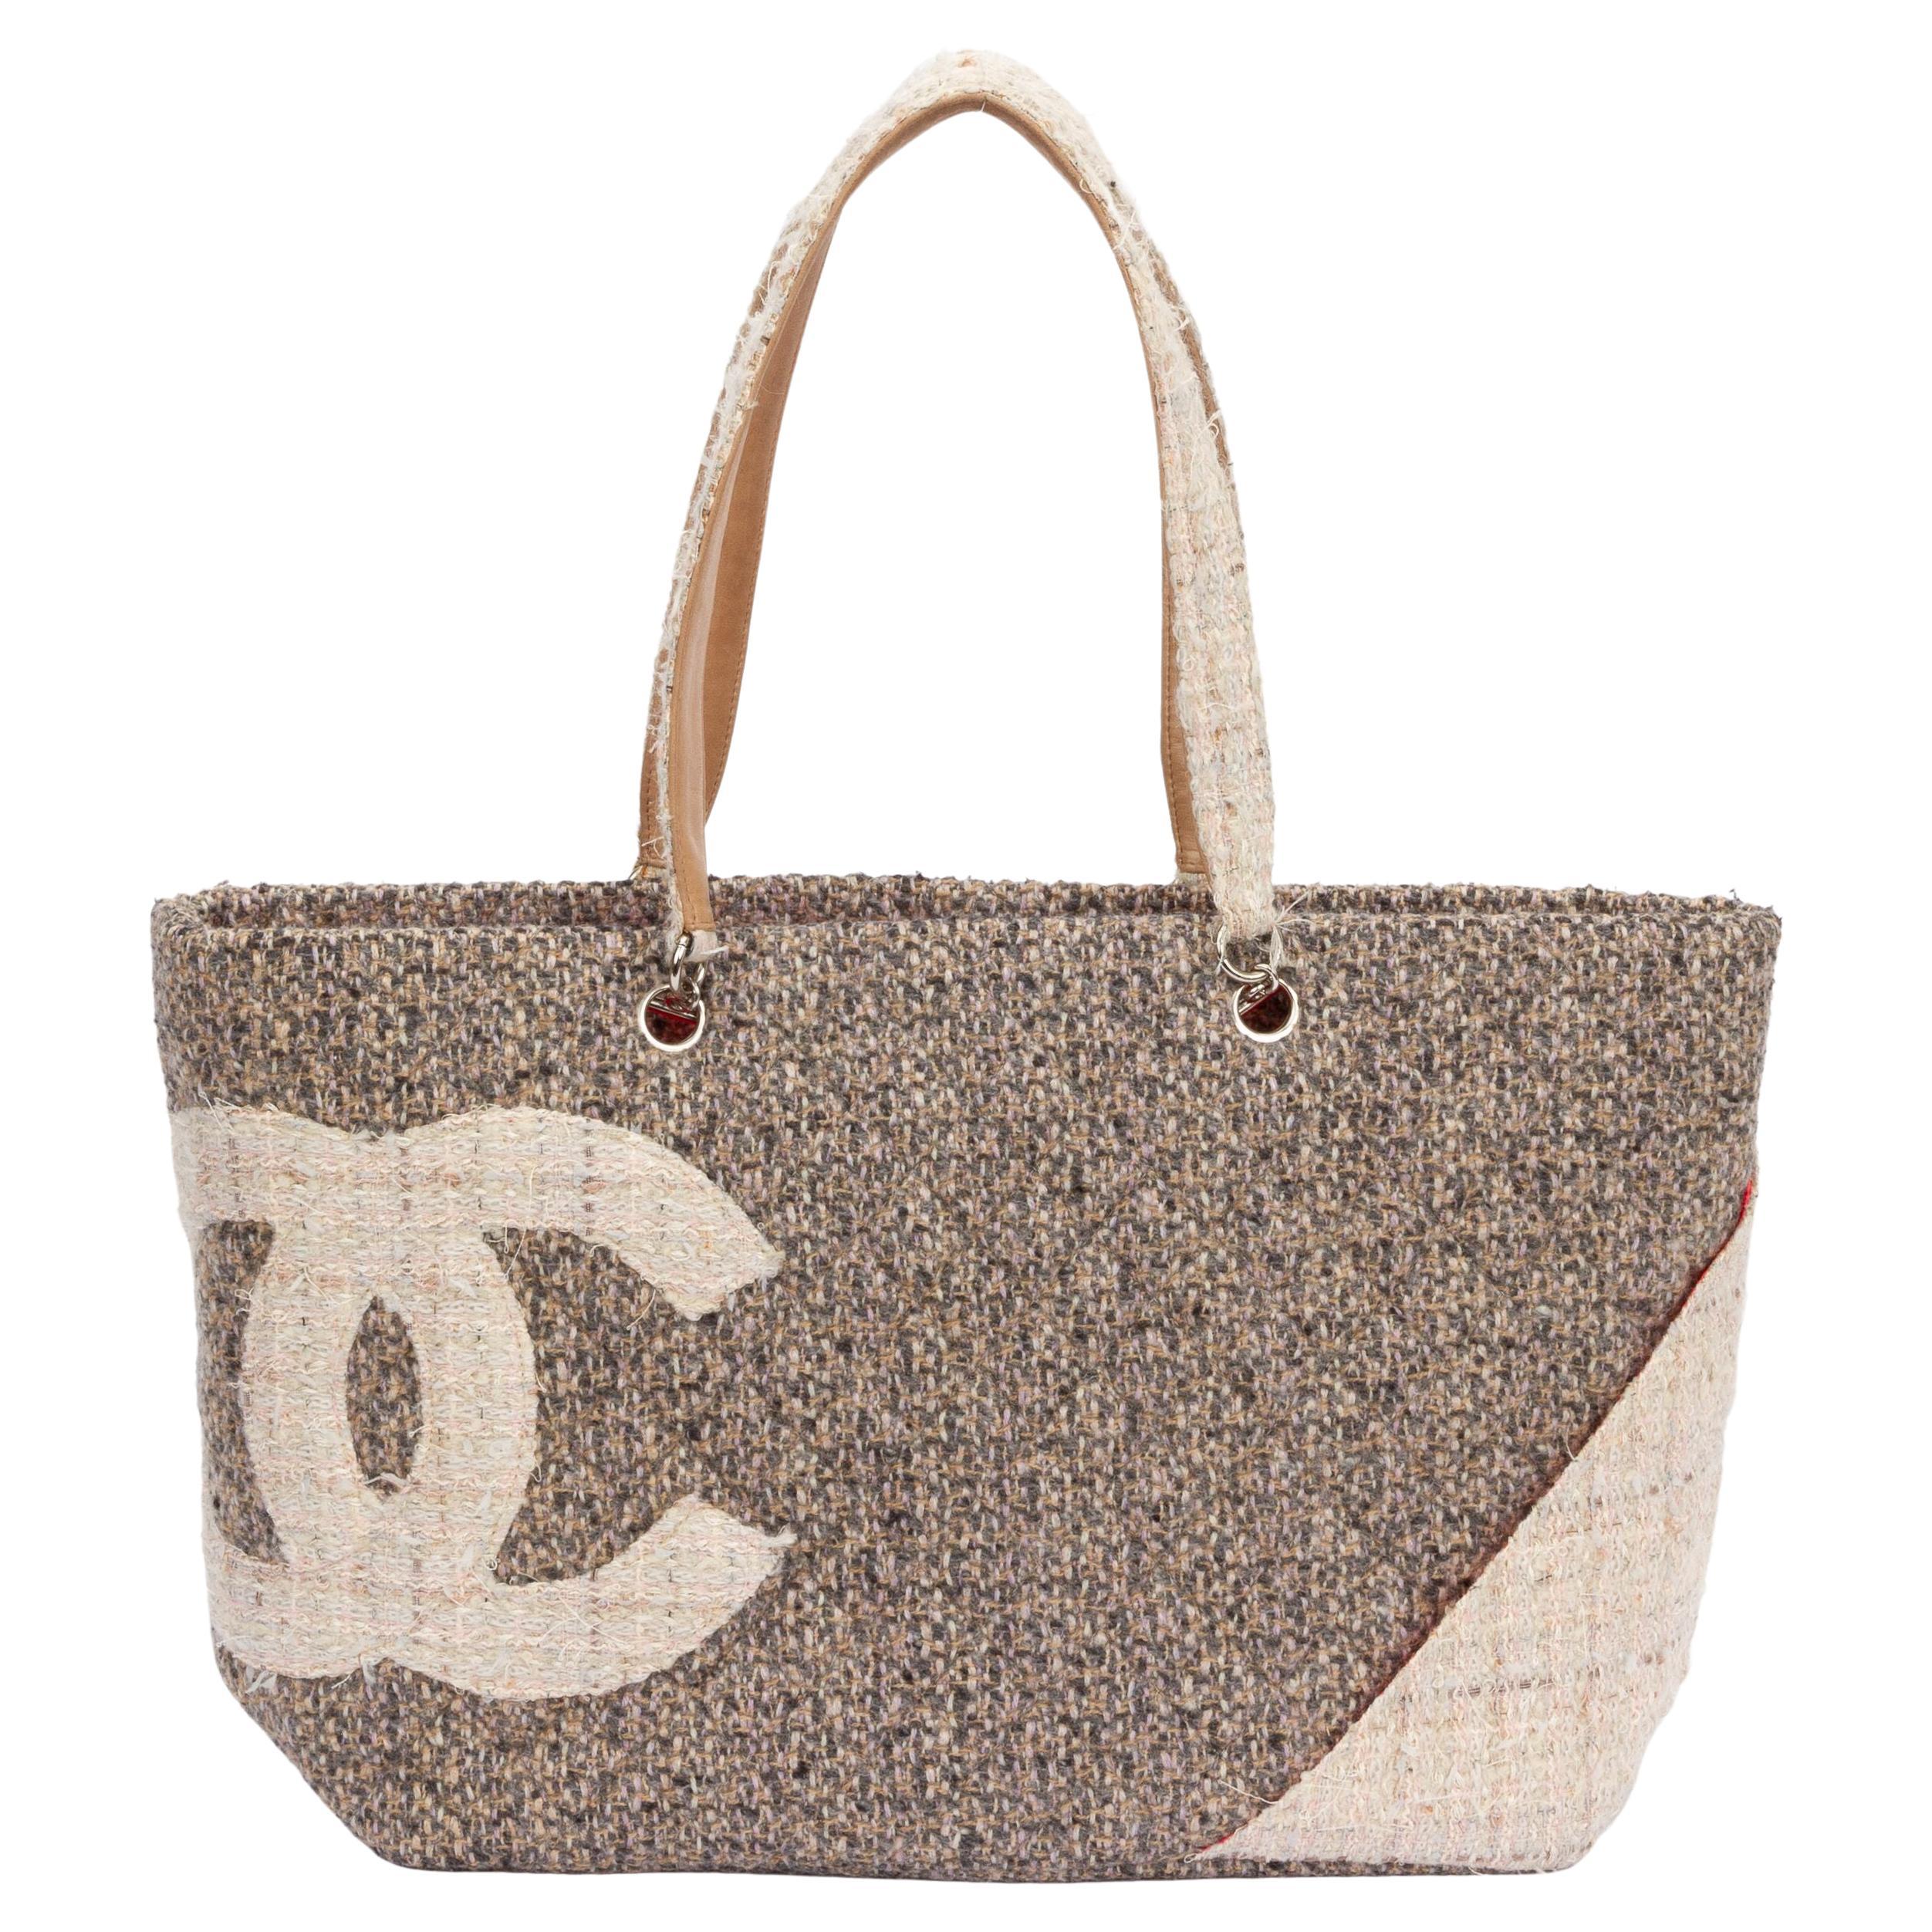 Chanel Boucle Bag - 6 For Sale on 1stDibs